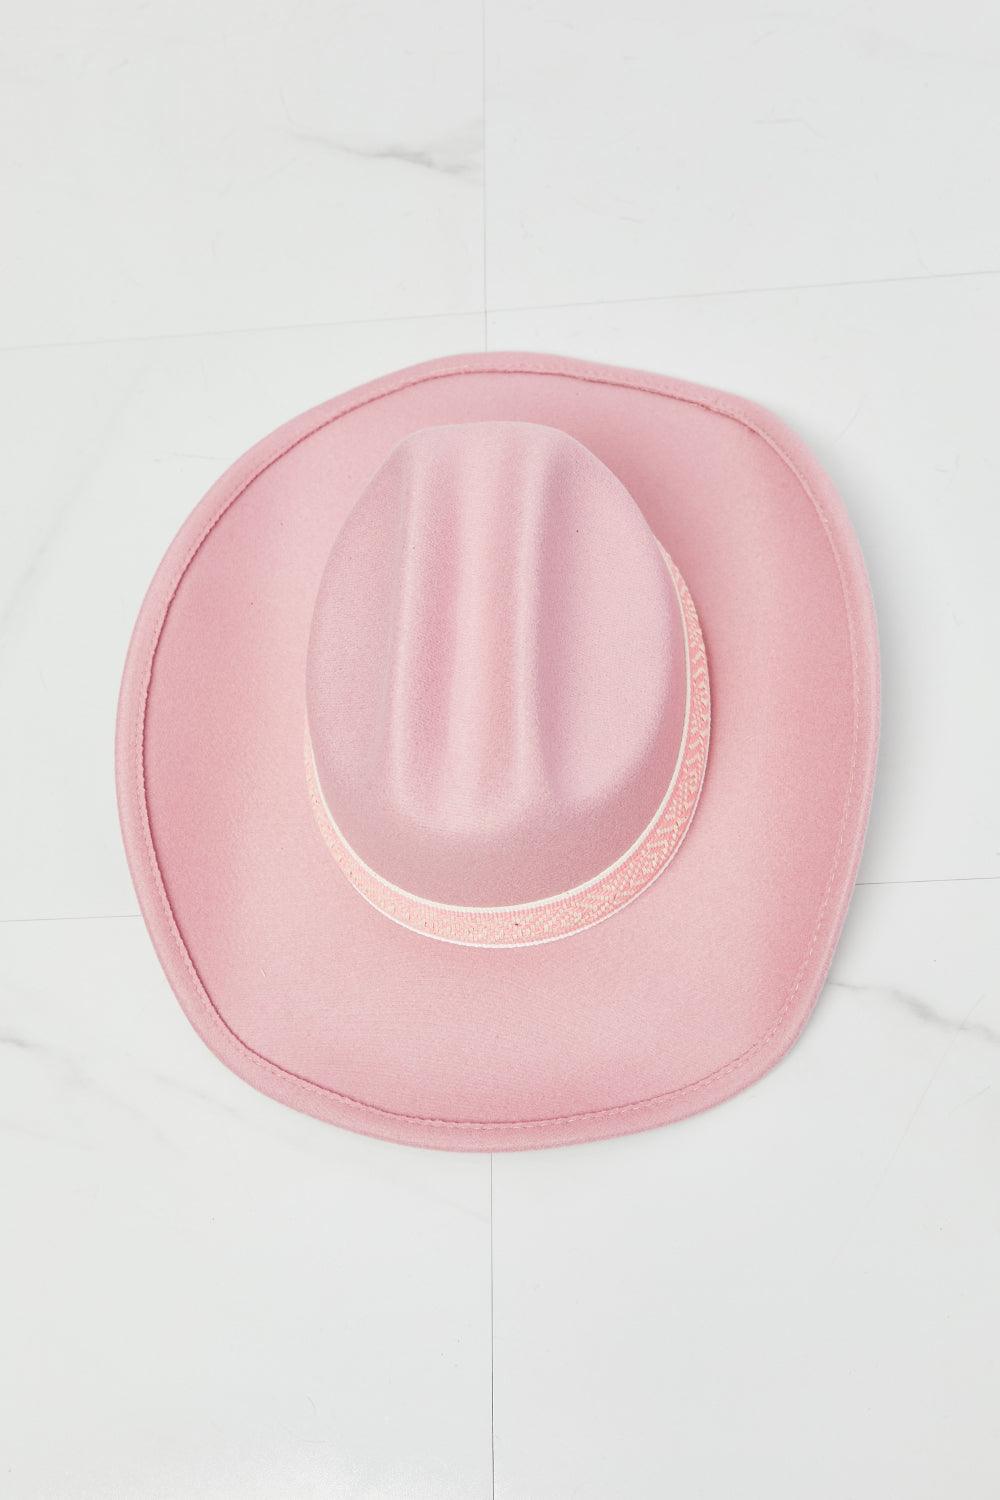 Fame Western Cutie Cowboy Hat in Pink - The Fiery Jasmine